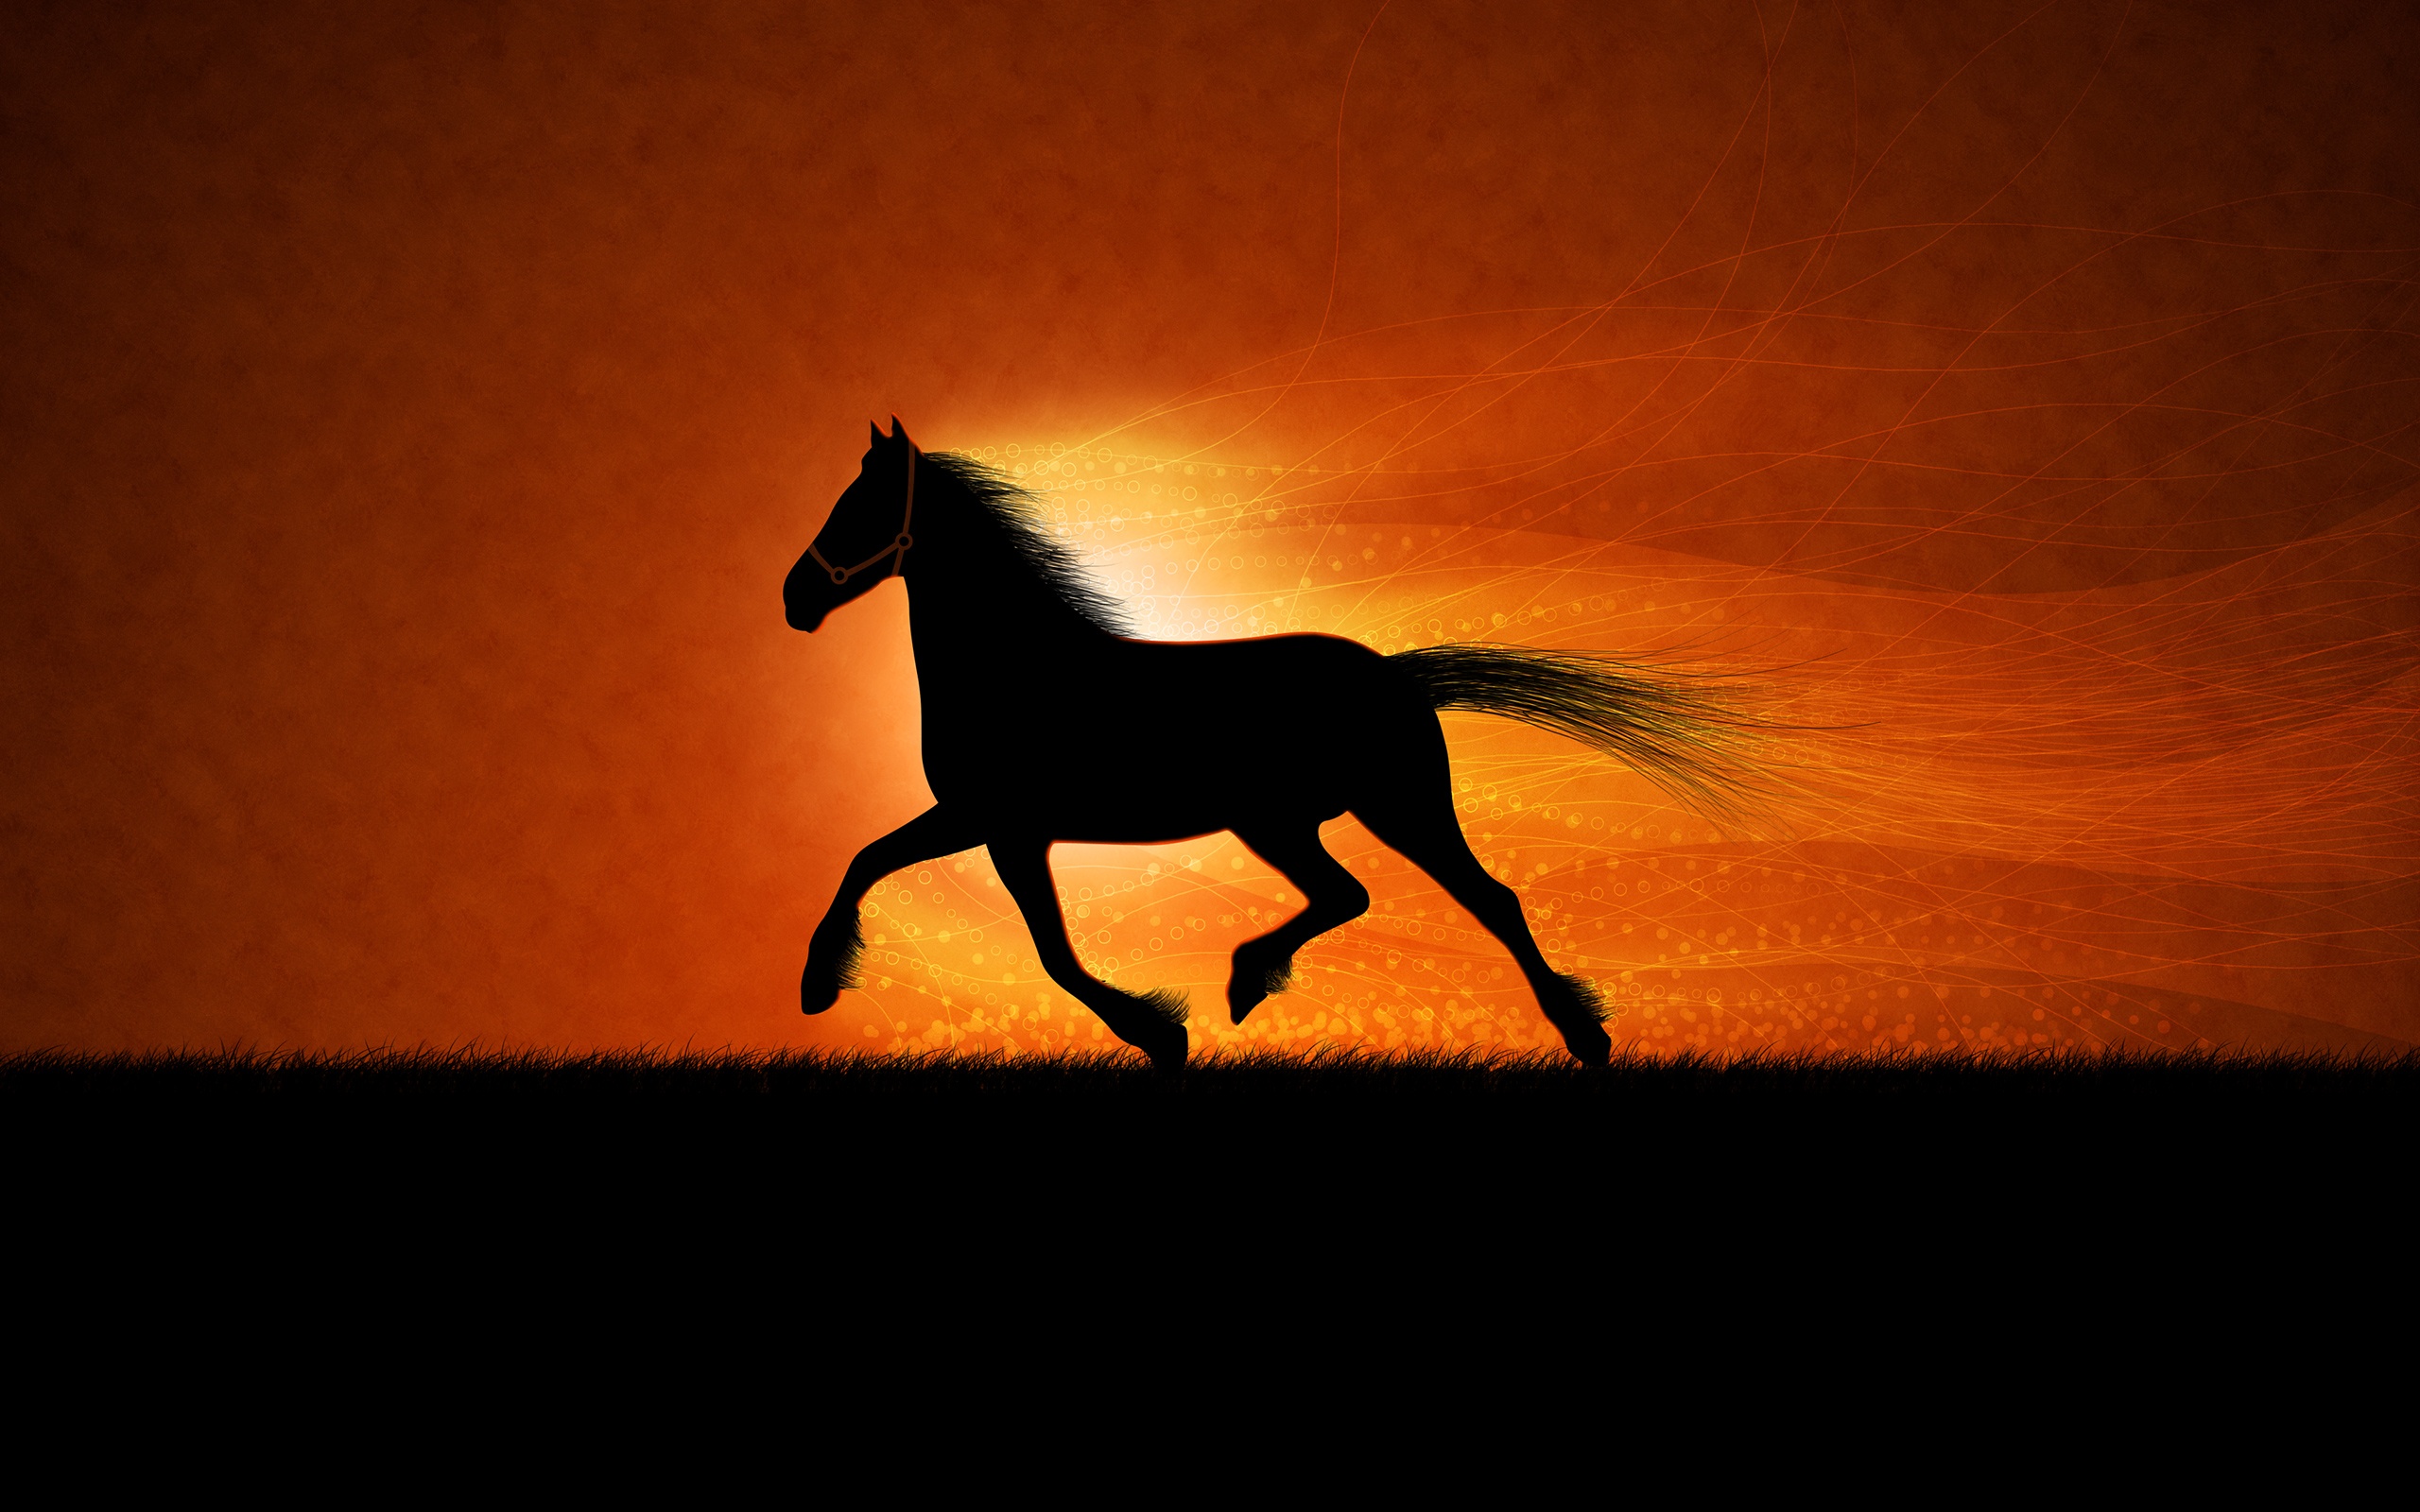 168026 descargar imagen animales, artístico, caballo, correr, atardecer: fondos de pantalla y protectores de pantalla gratis